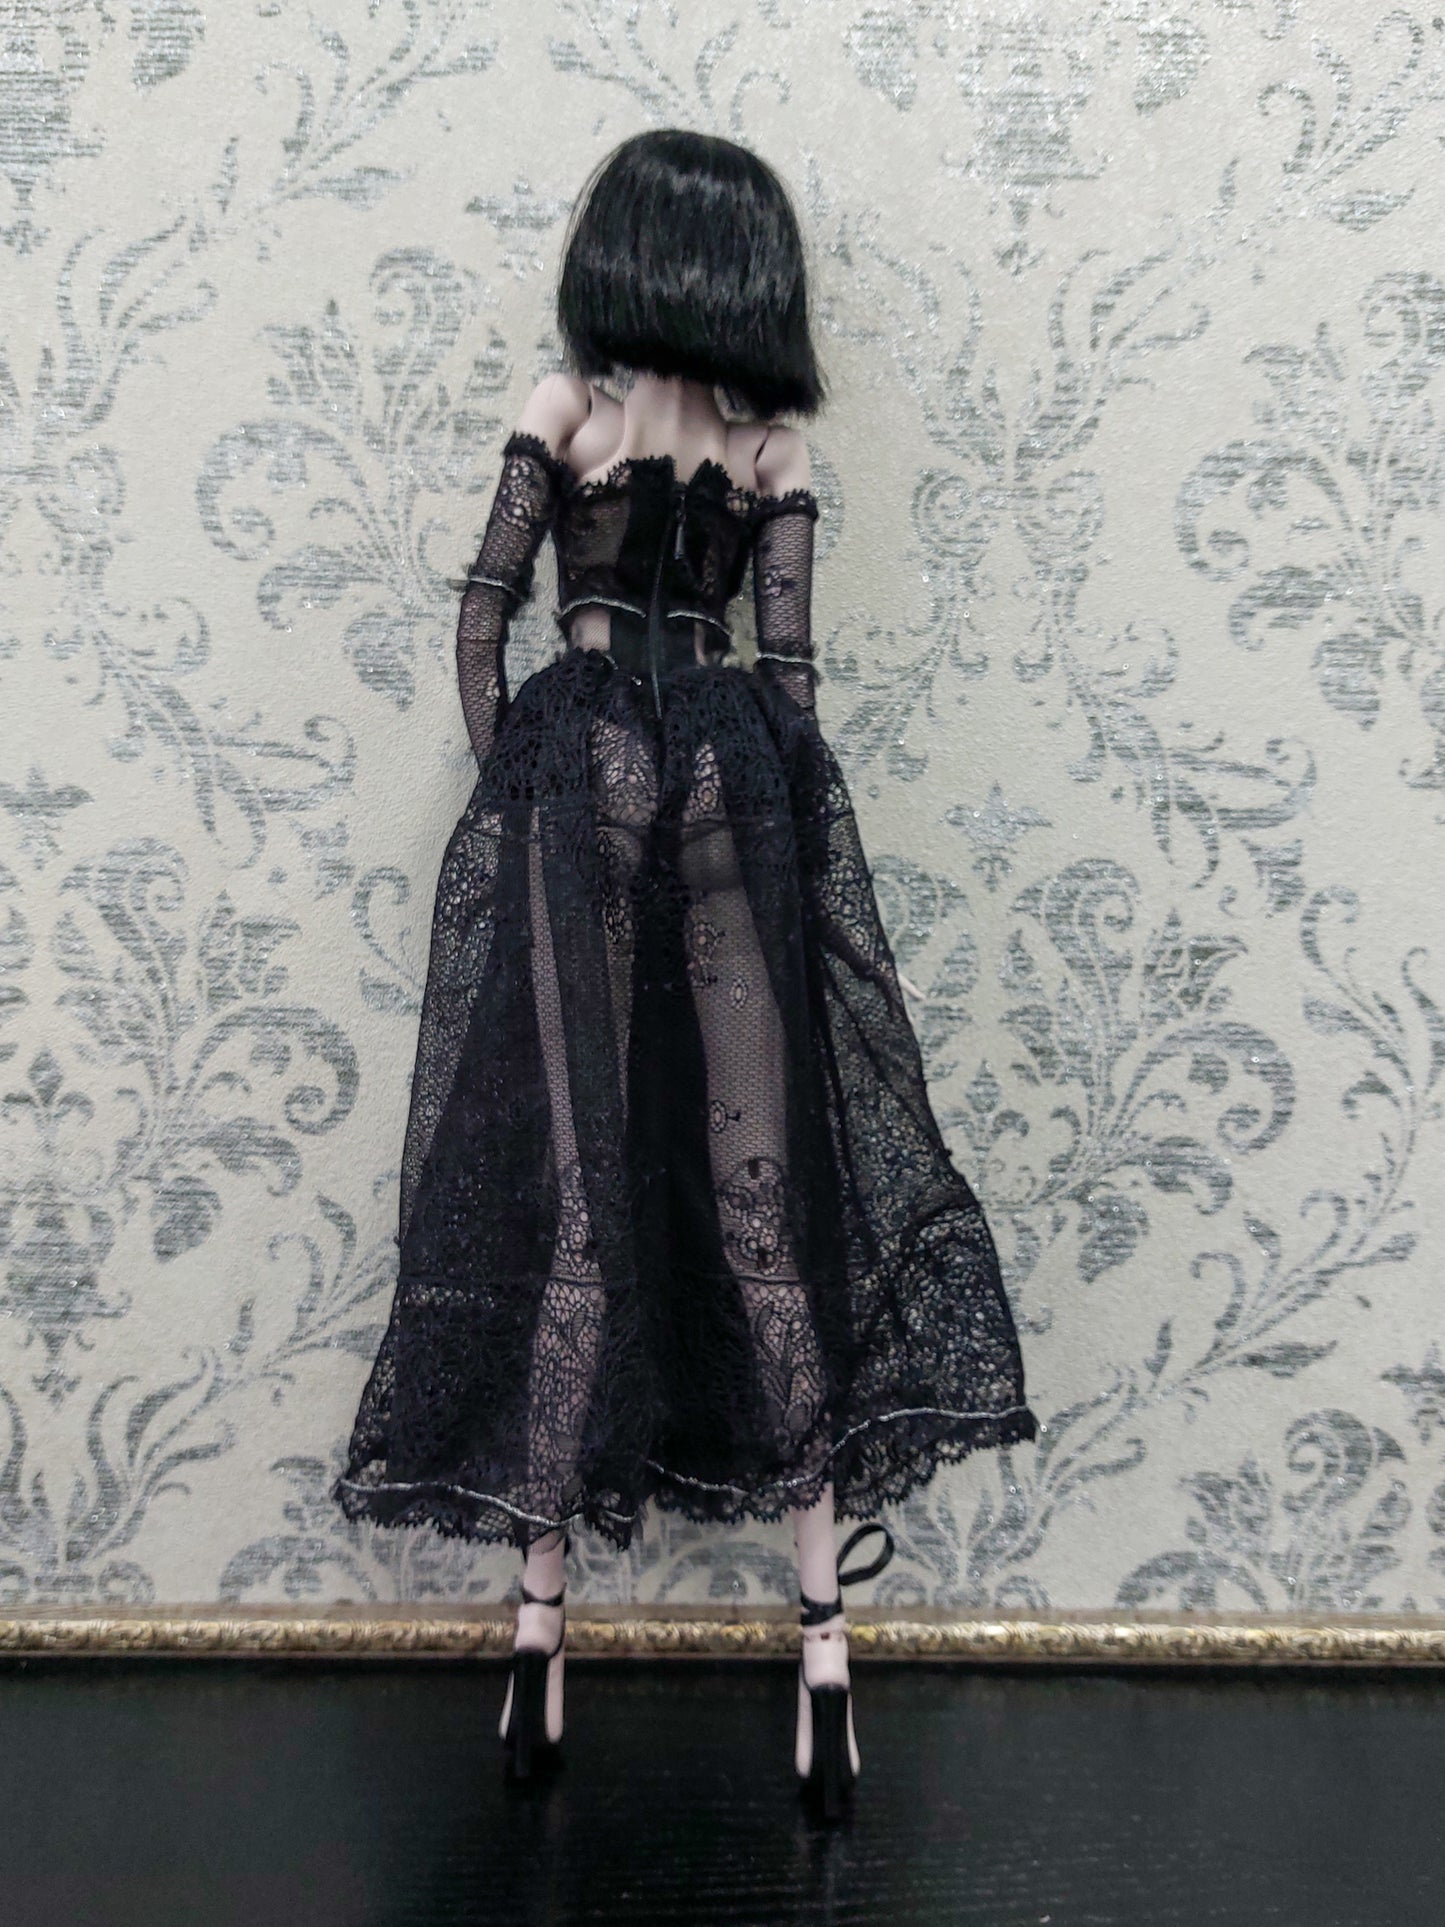 Lace dress, black